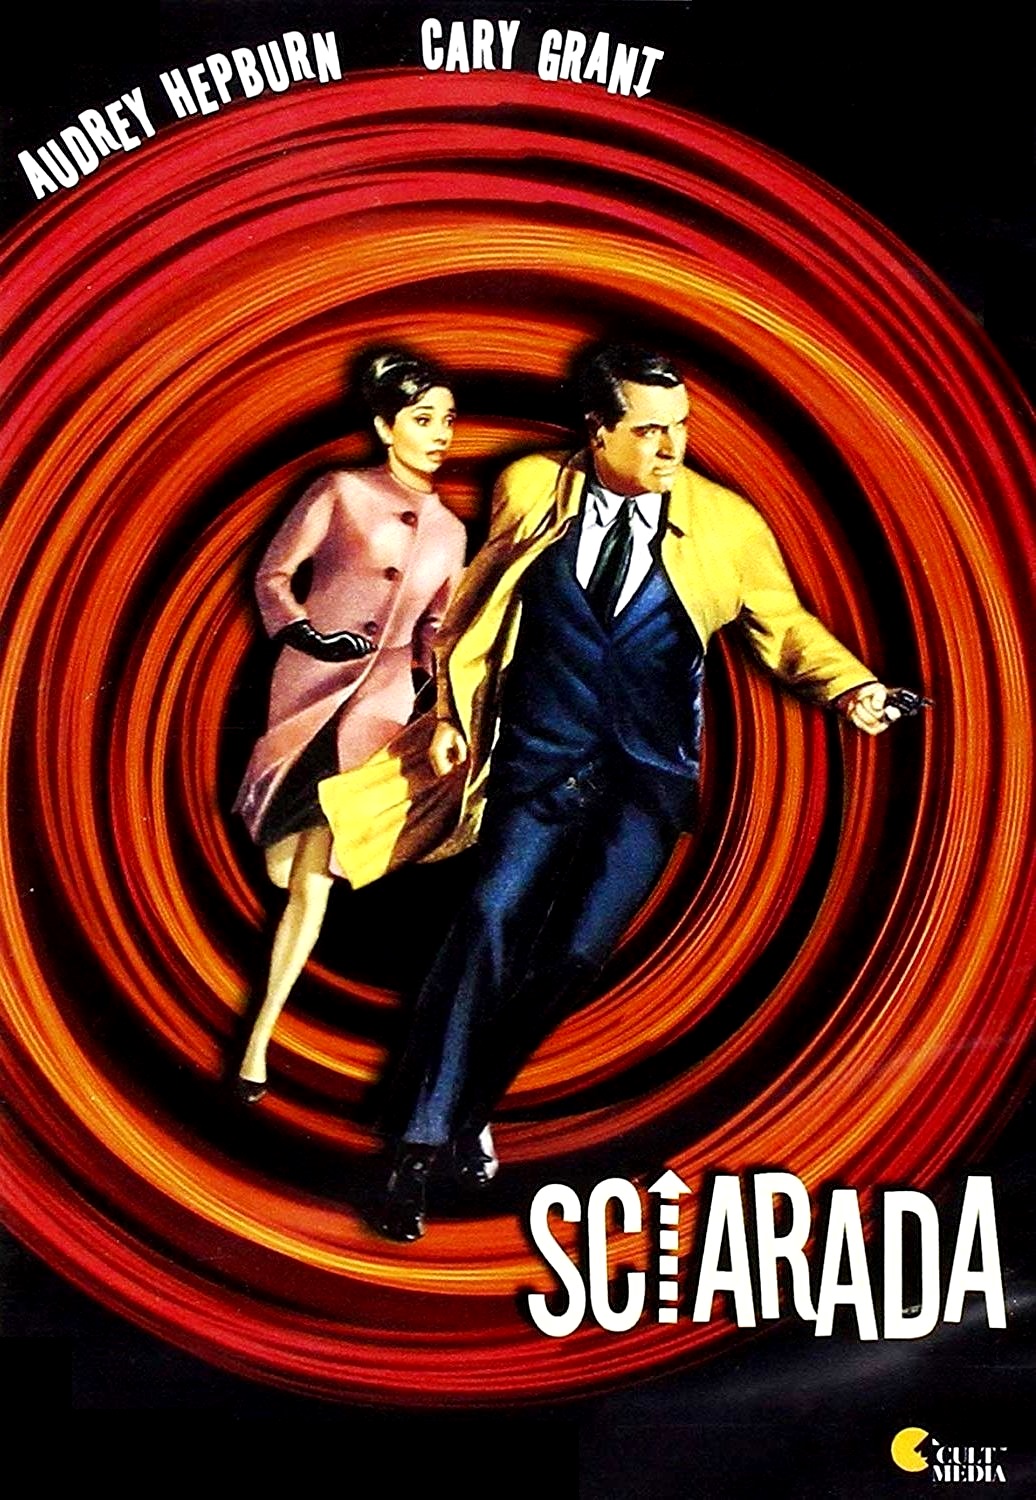 Sciarada [HD] (1962)